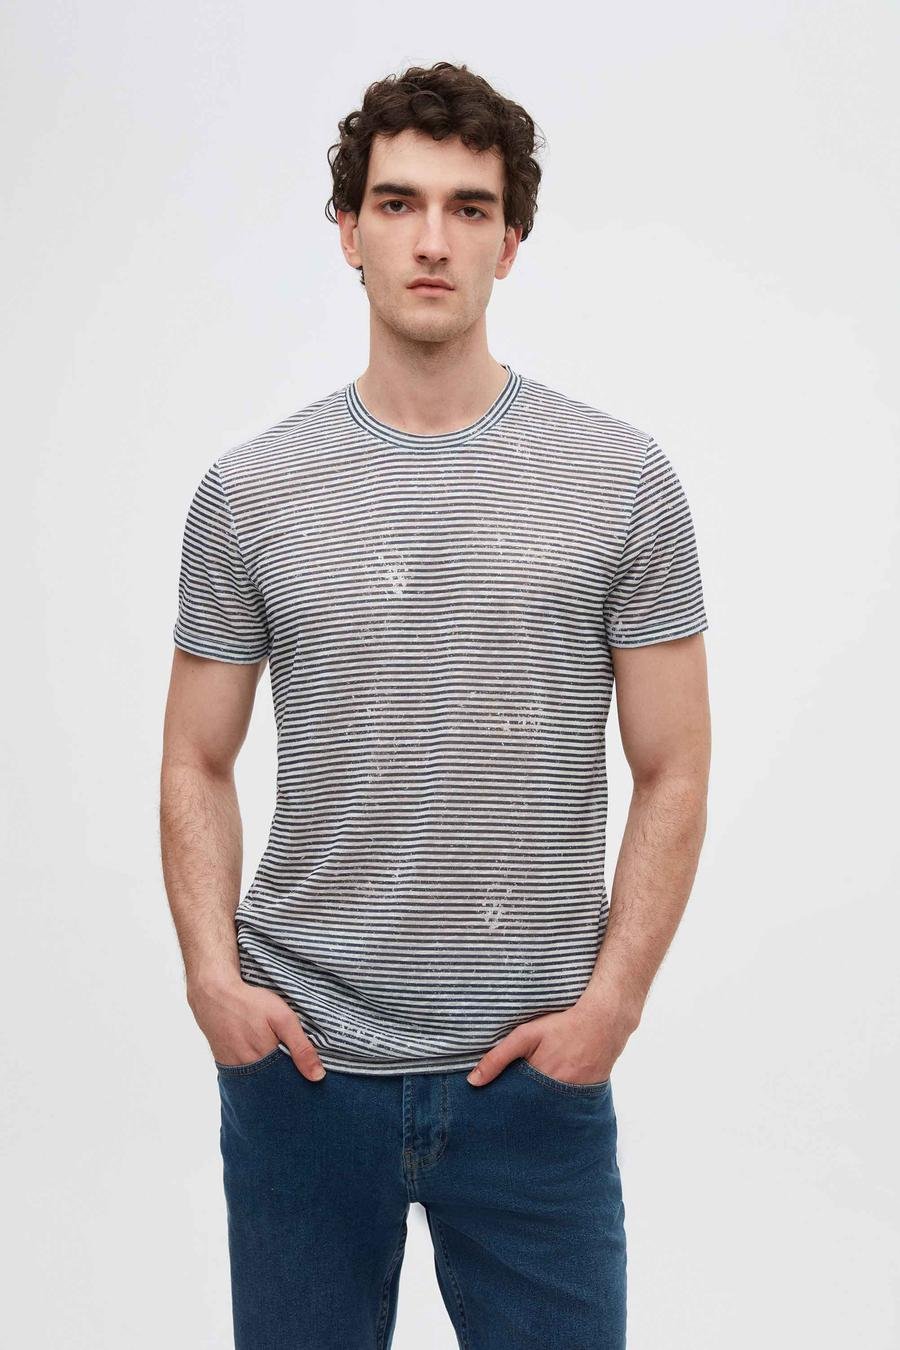 Twn Slim Fit Lacivert Çizgi Baskılı T-Shirt - 8683925125243 | D'S Damat